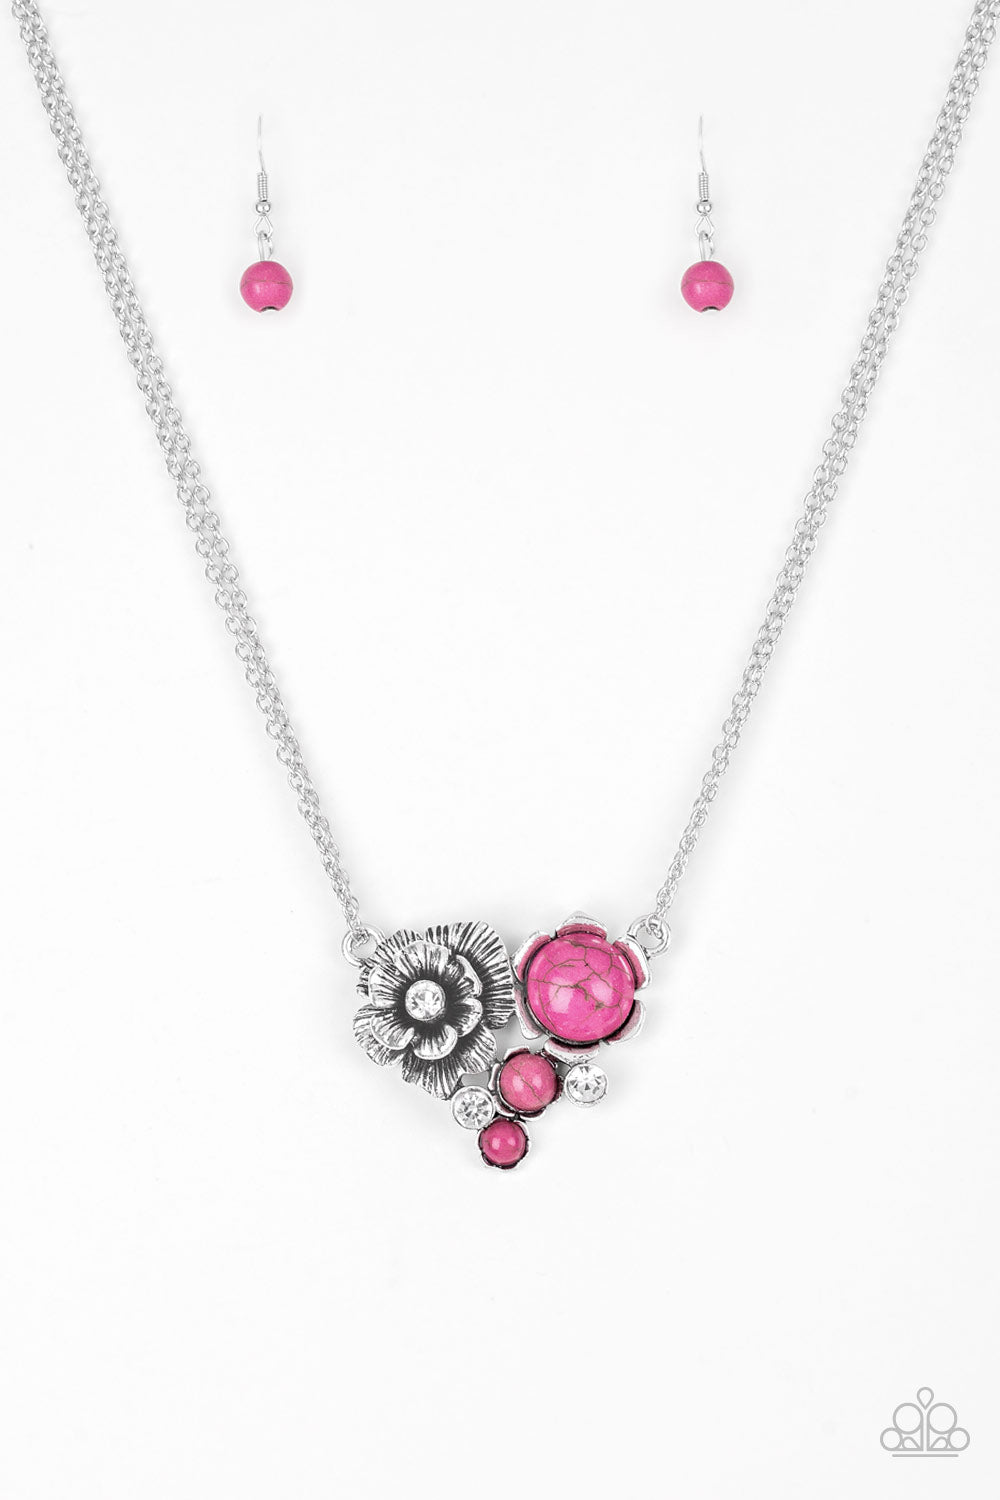 Desert Harvest Pink Paparazzi Necklaces Cashmere Pink Jewels - Cashmere Pink Jewels & Accessories, Cashmere Pink Jewels & Accessories - Paparazzi